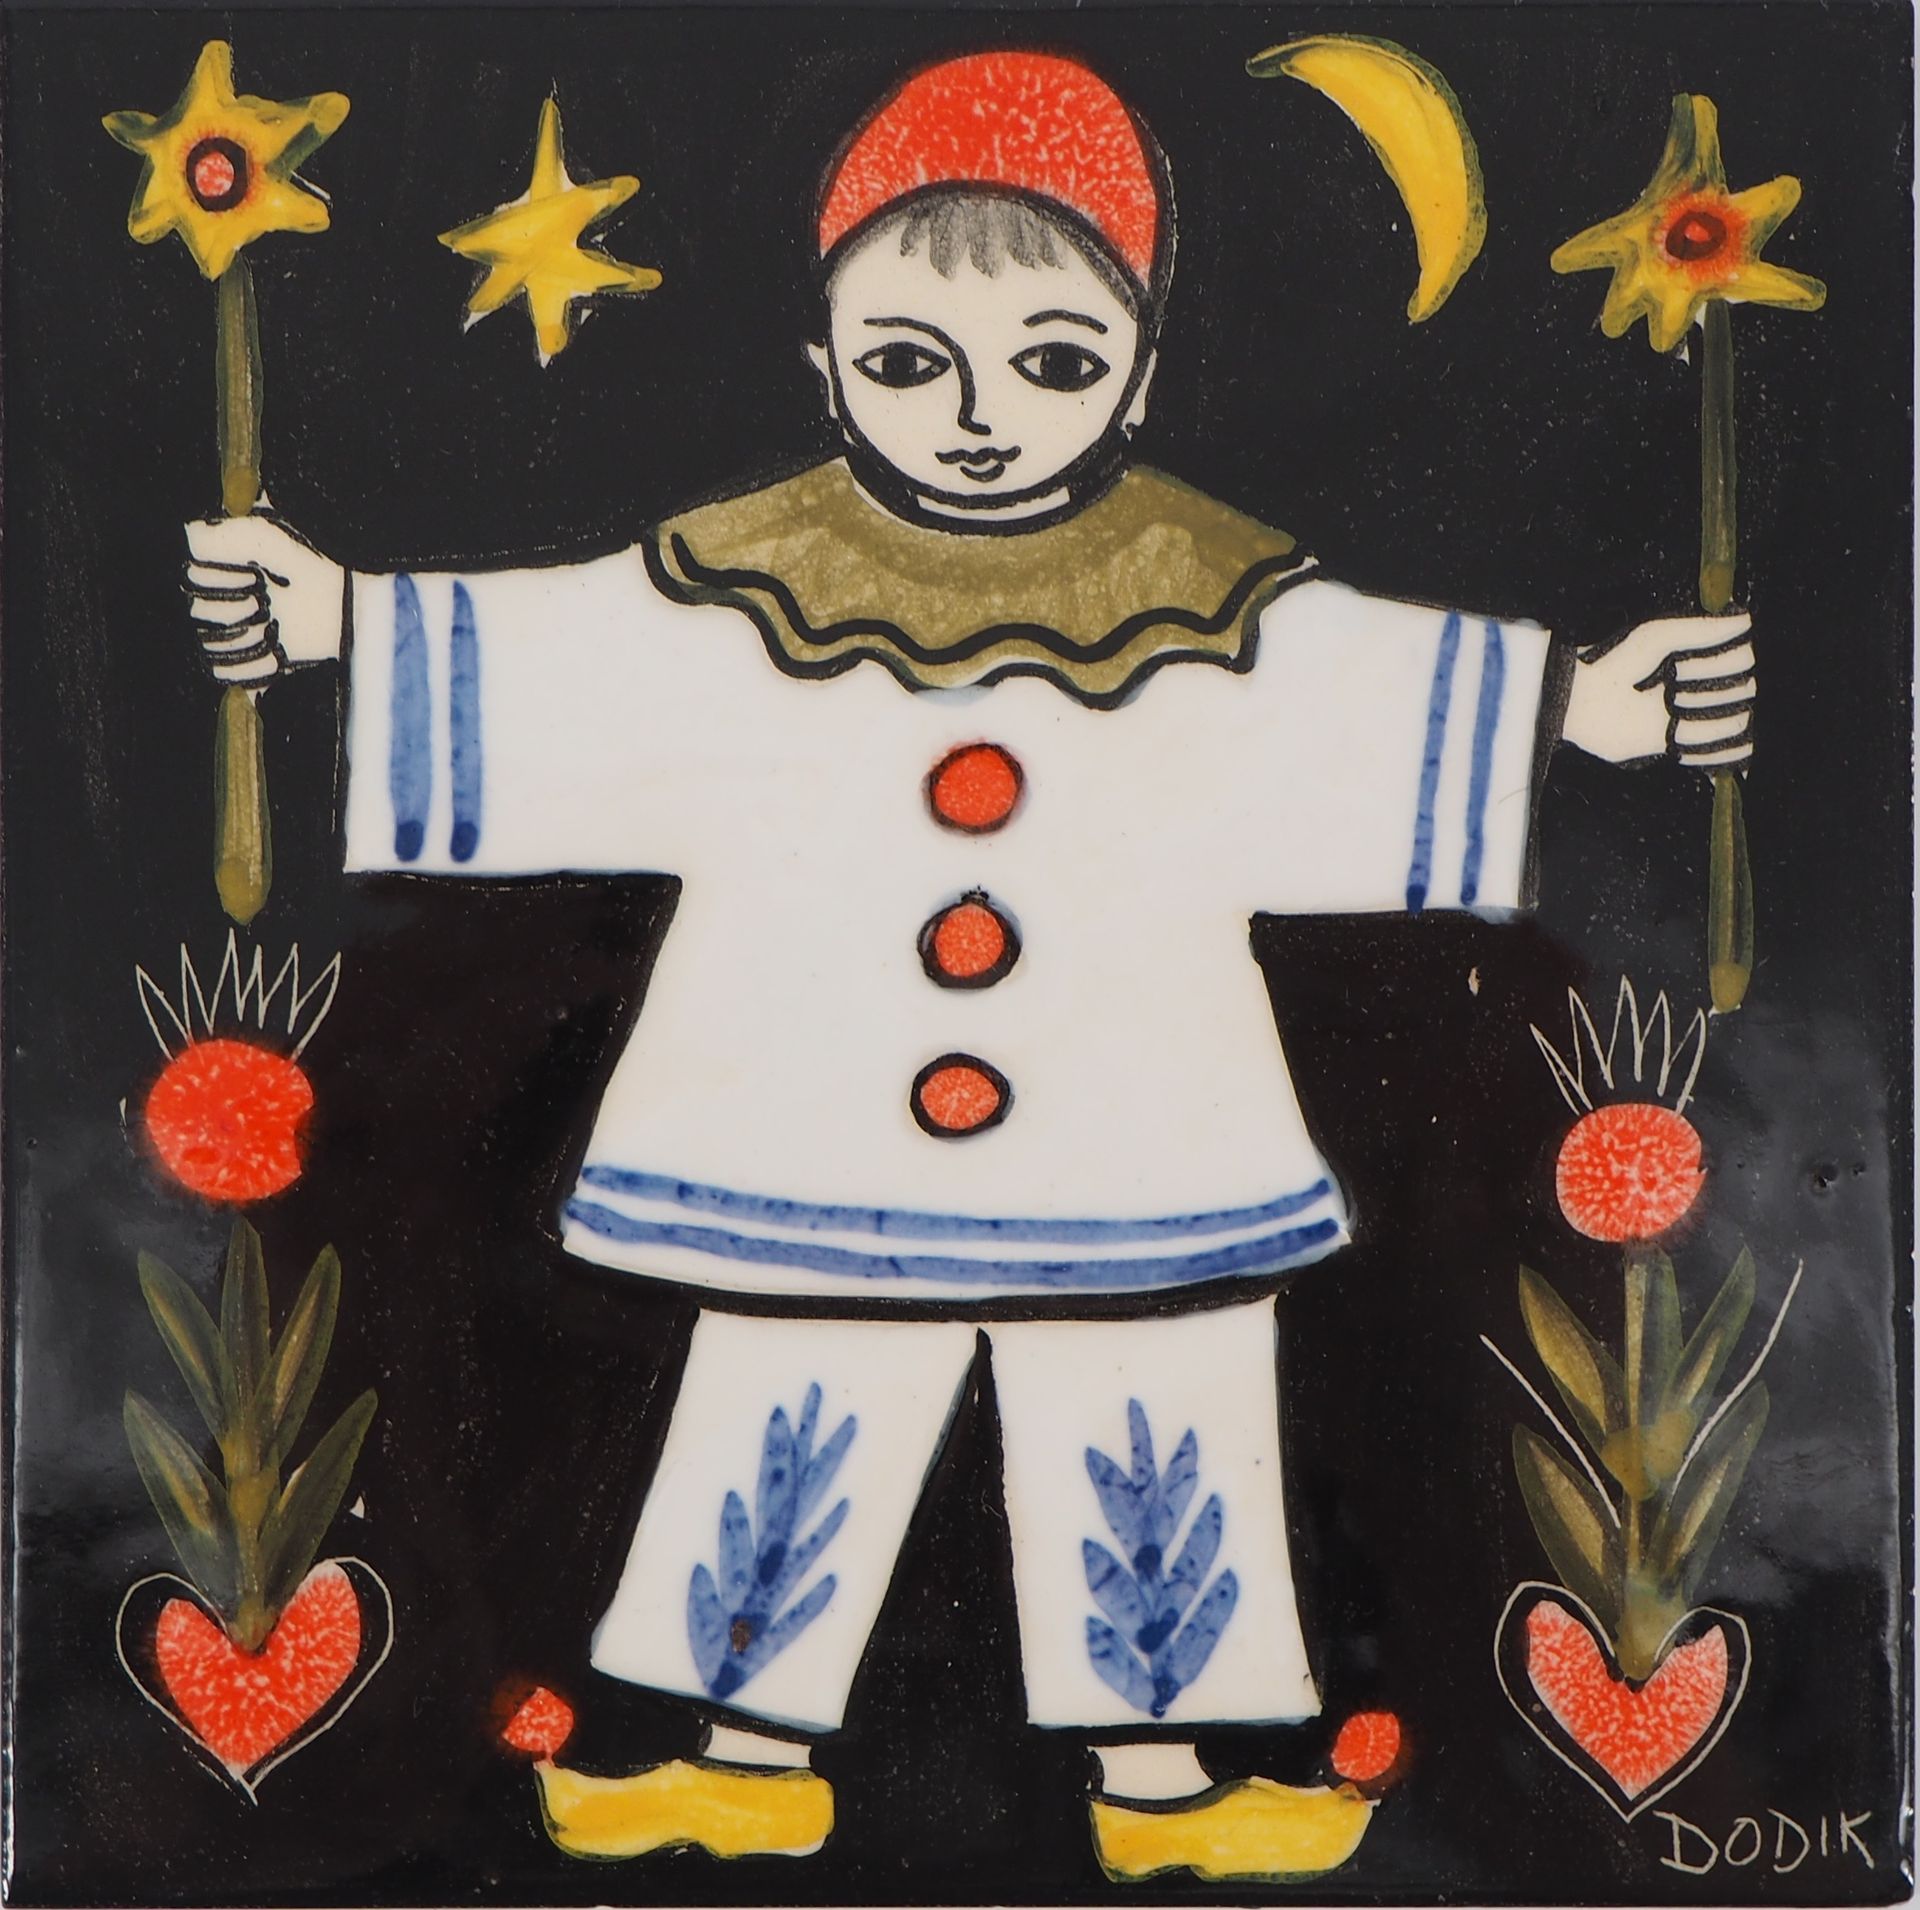 DODIK DODIK (Dodik Jégou, 1934-)

Pierrot der Mond

Original Keramik (Saint Malo&hellip;